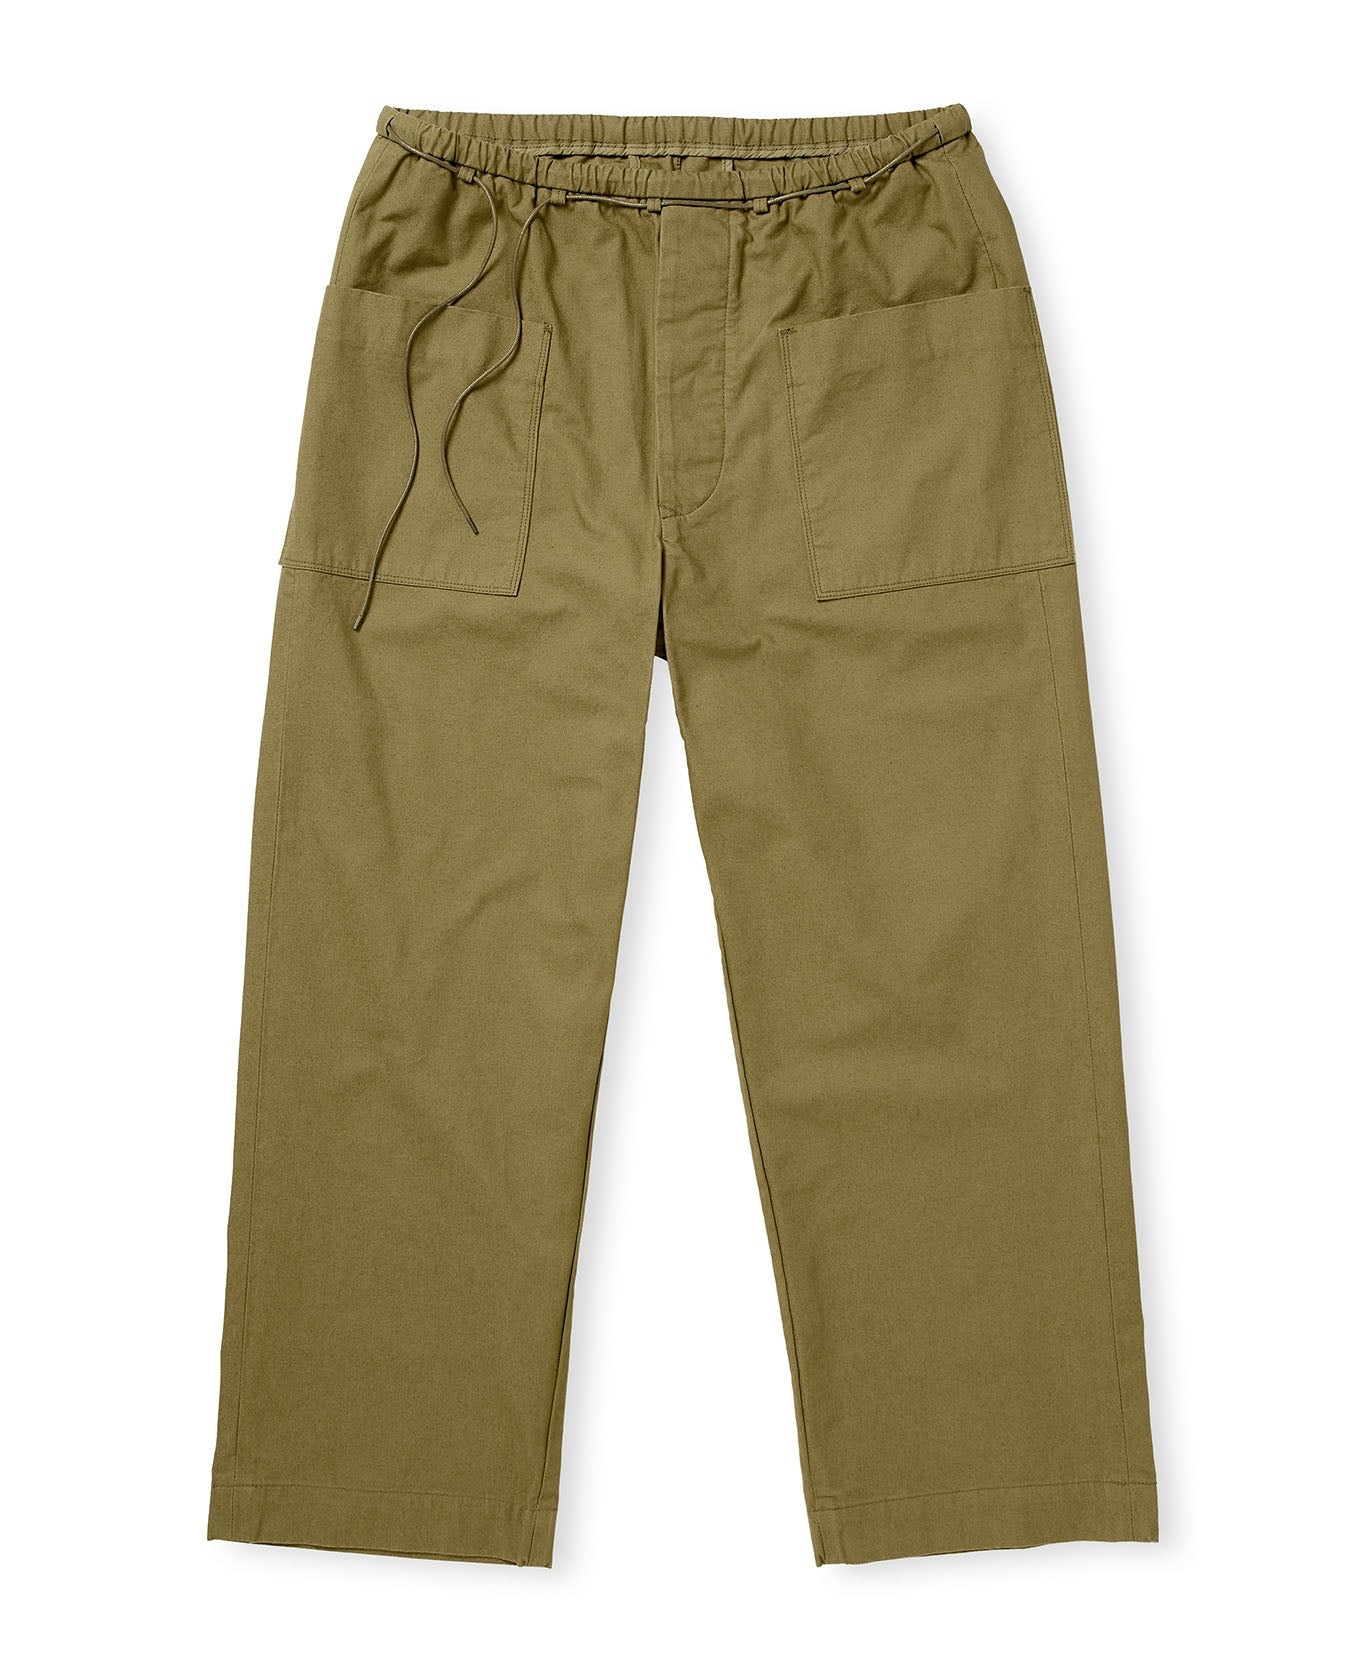 Japanese US Army Fatigue Pants - Military Green - 1